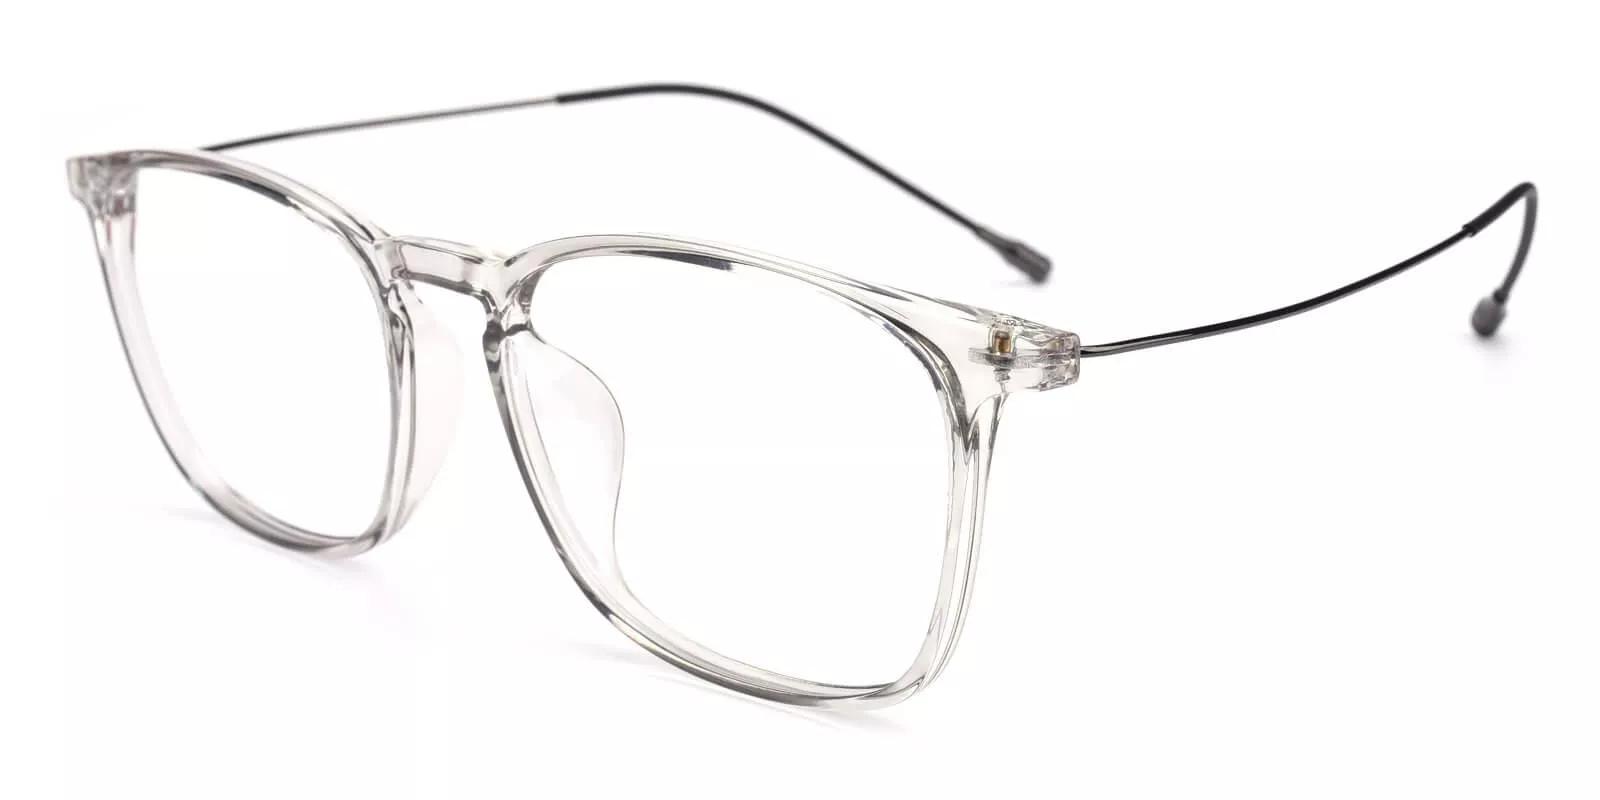 Norwalk Prescription Eyeglasses Gray Clear